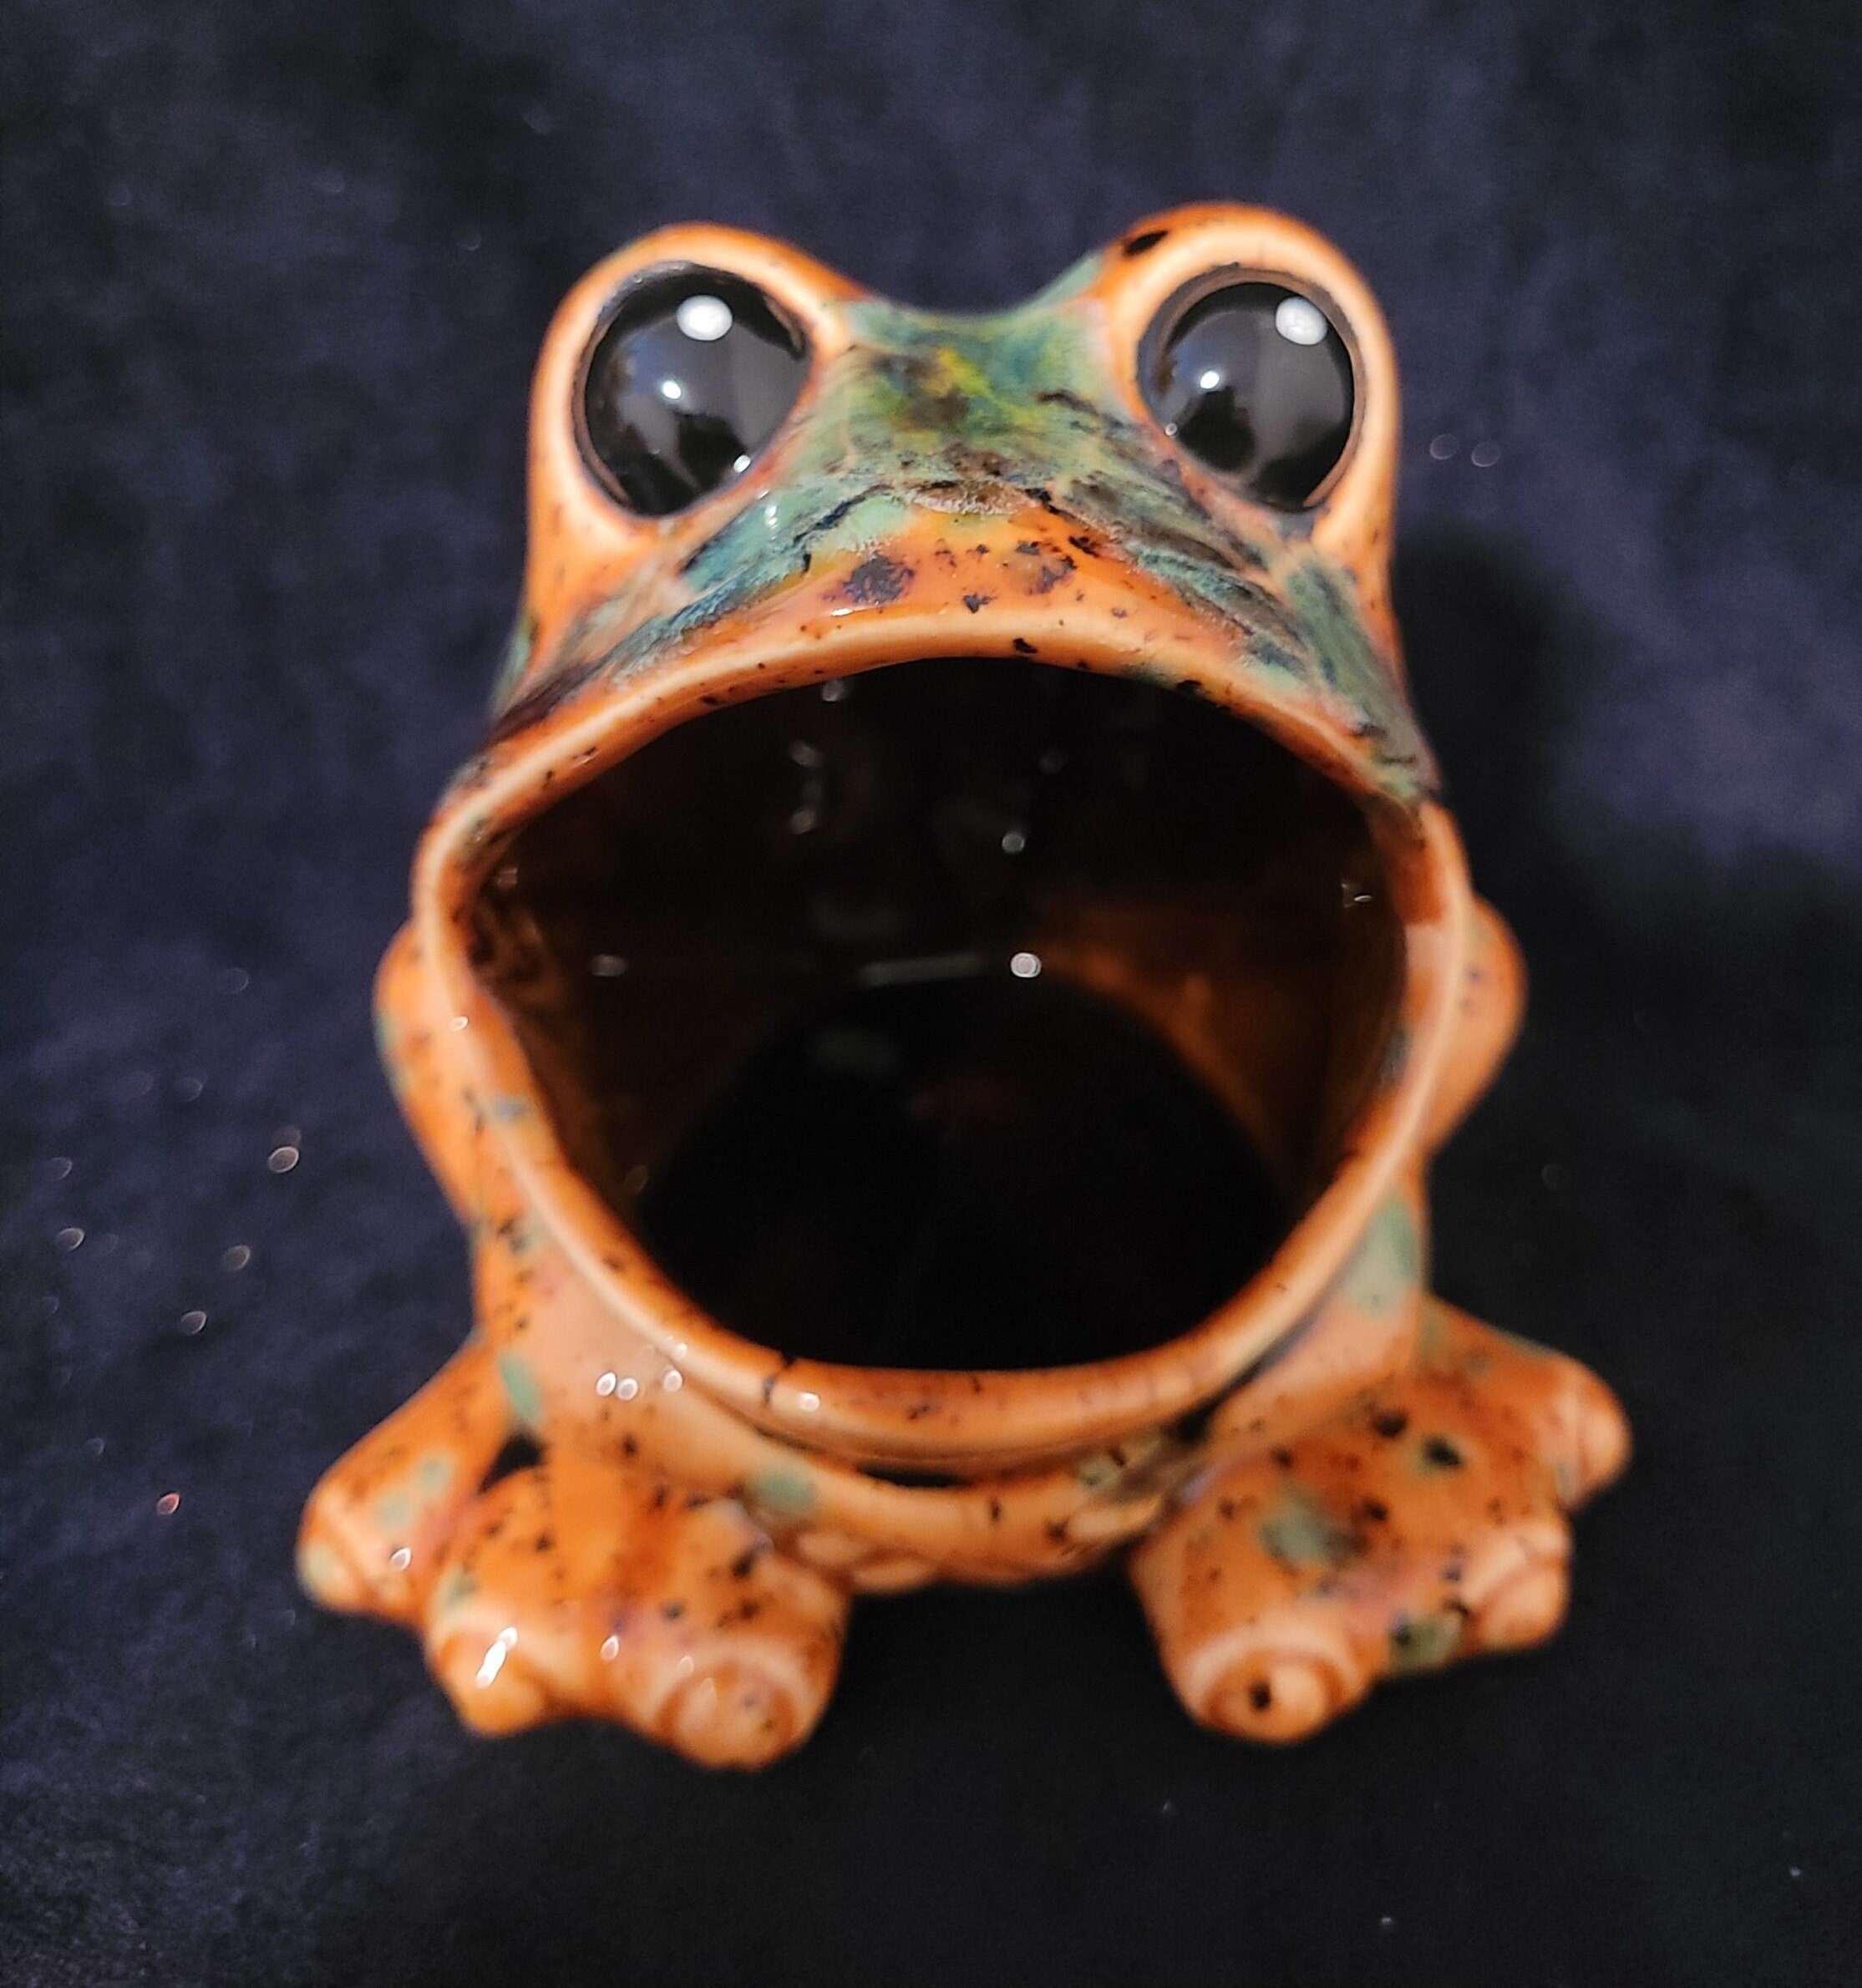 Vintage Speckled Frog Sponge White Green Scouring Pad Holder Widemouth  Retro MCM